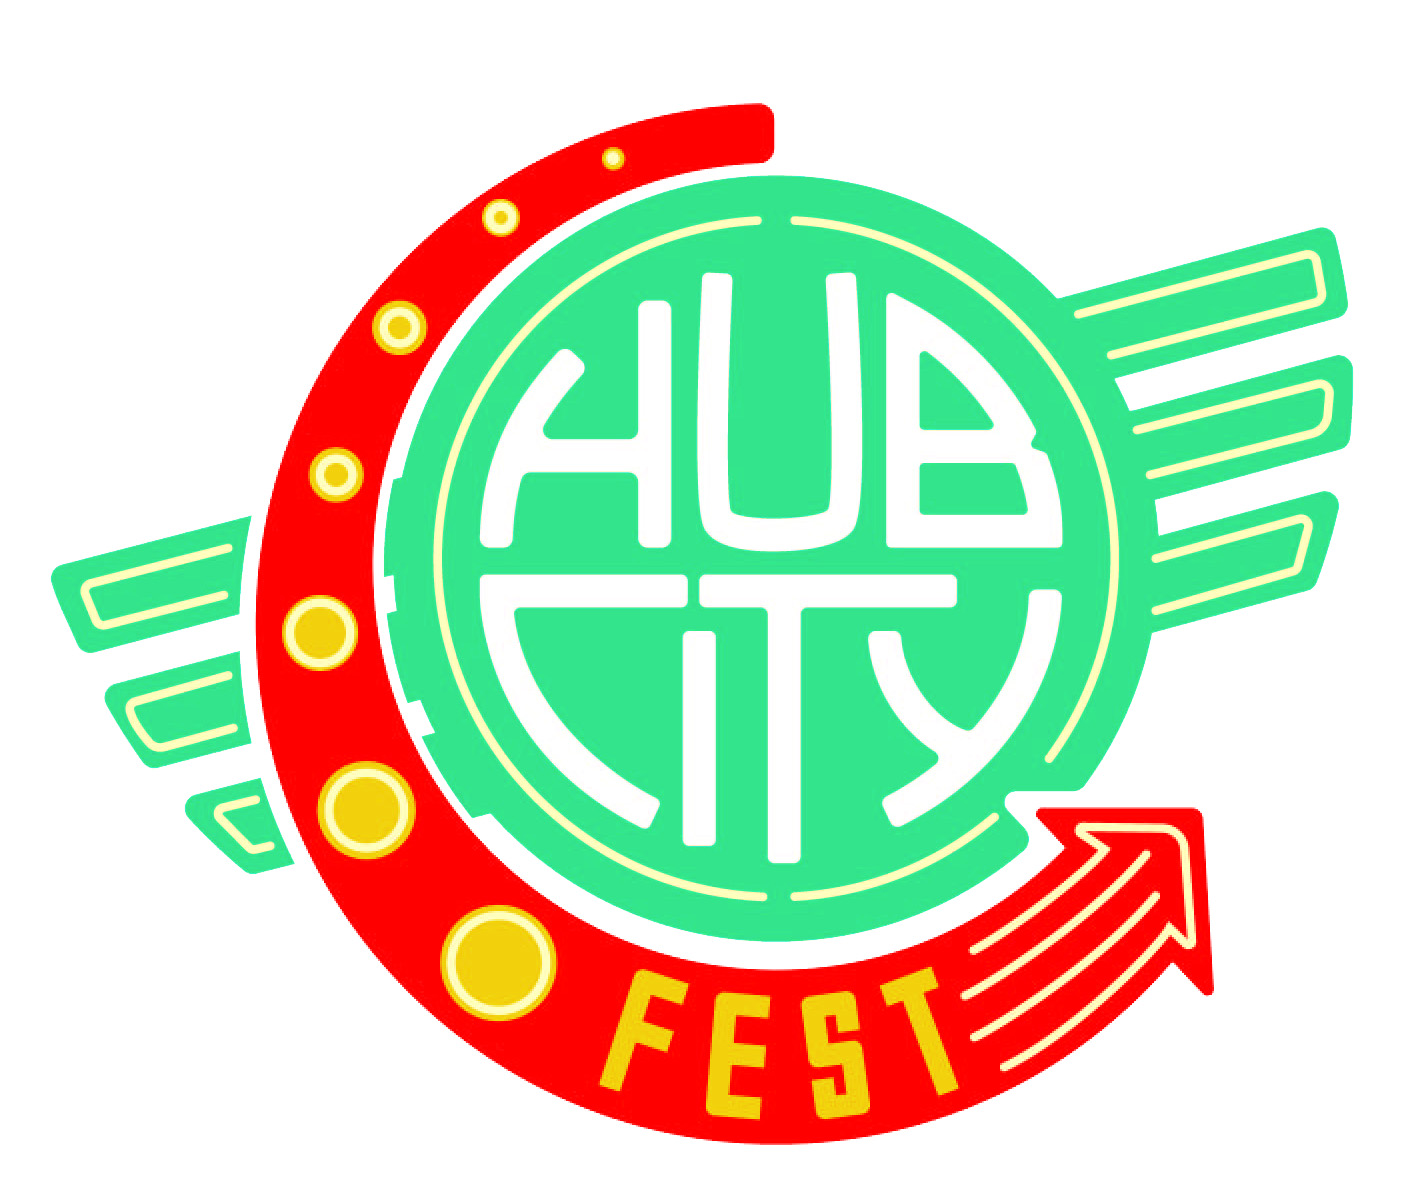 Hub City Fest